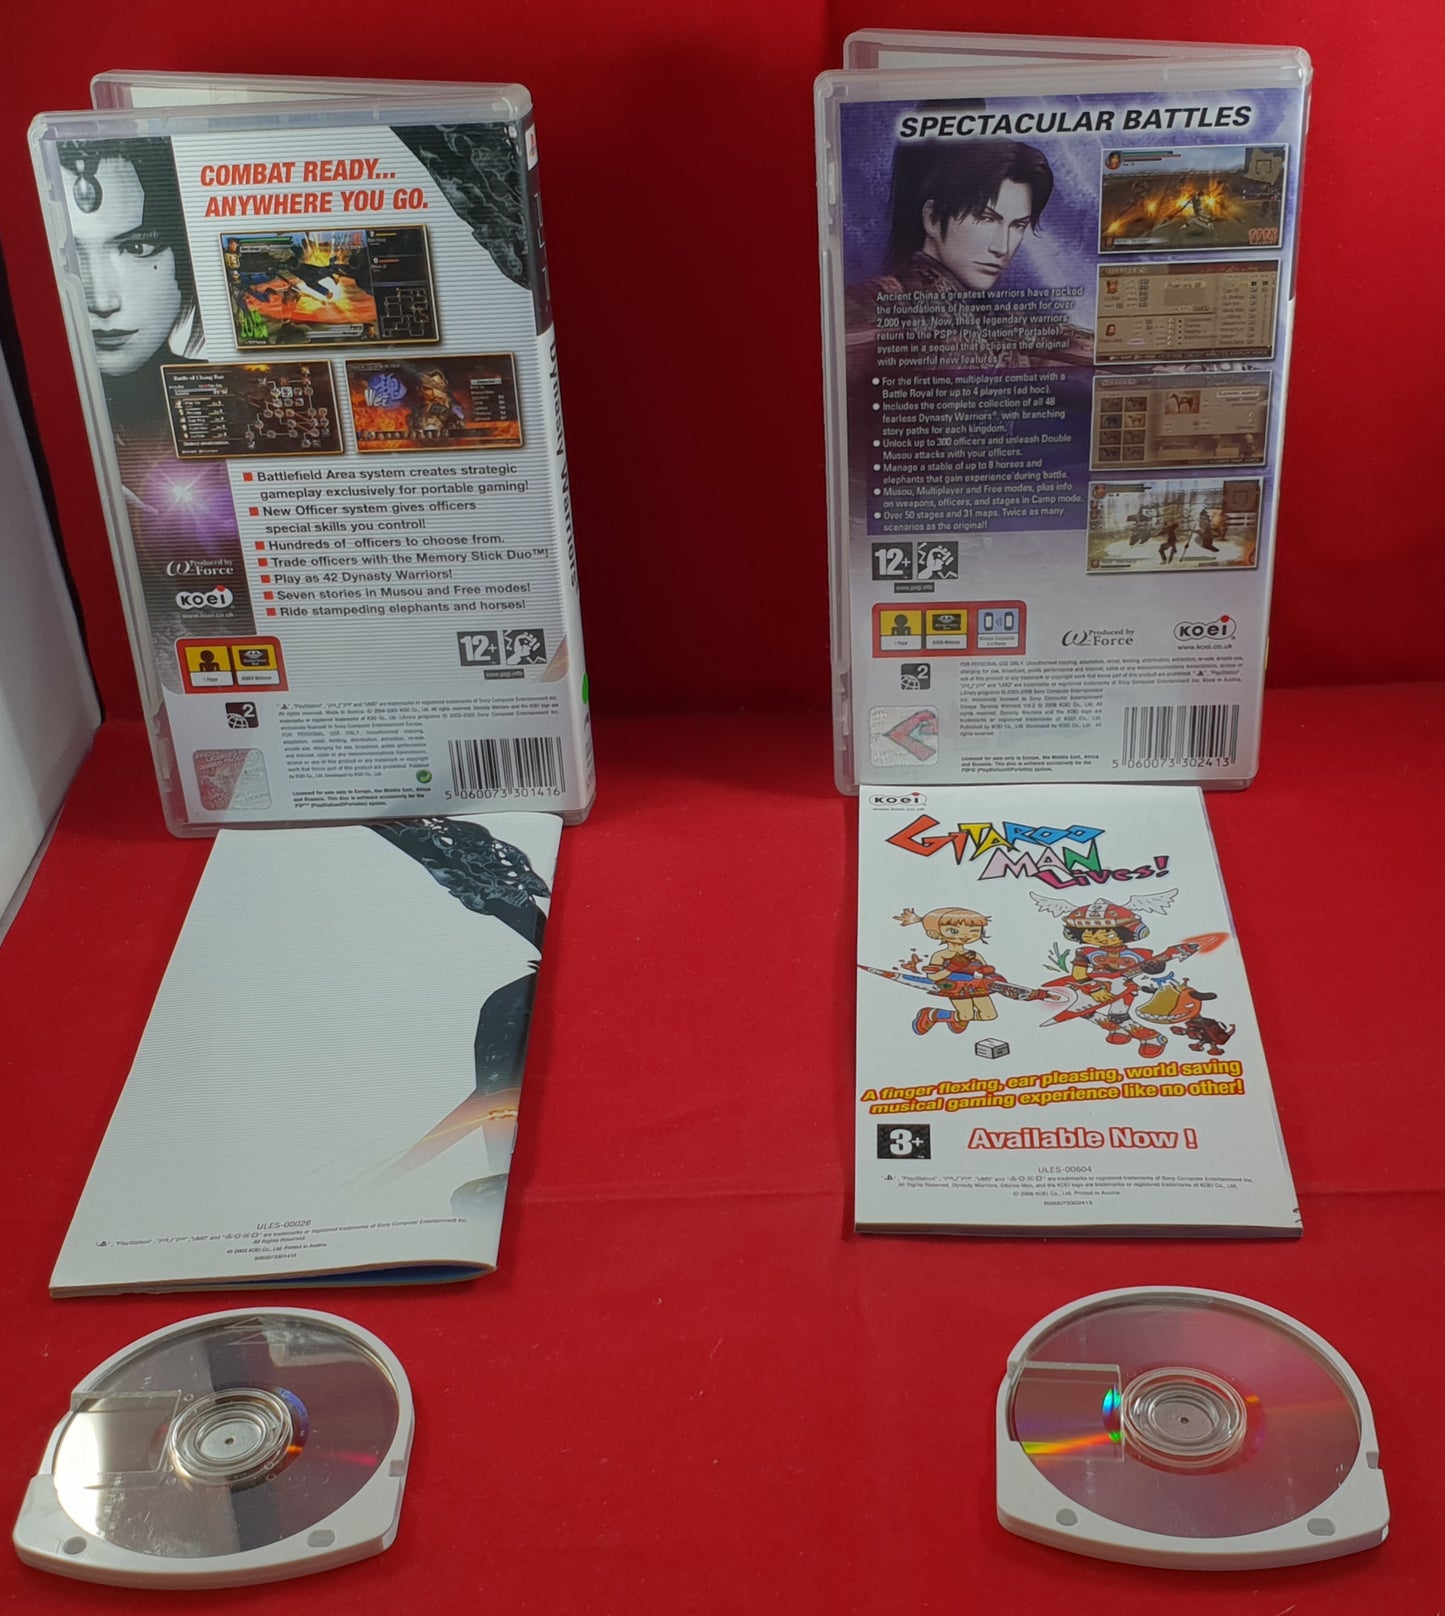 Dynasty Warriors 1 & 2 Sony PSP Game Bundle